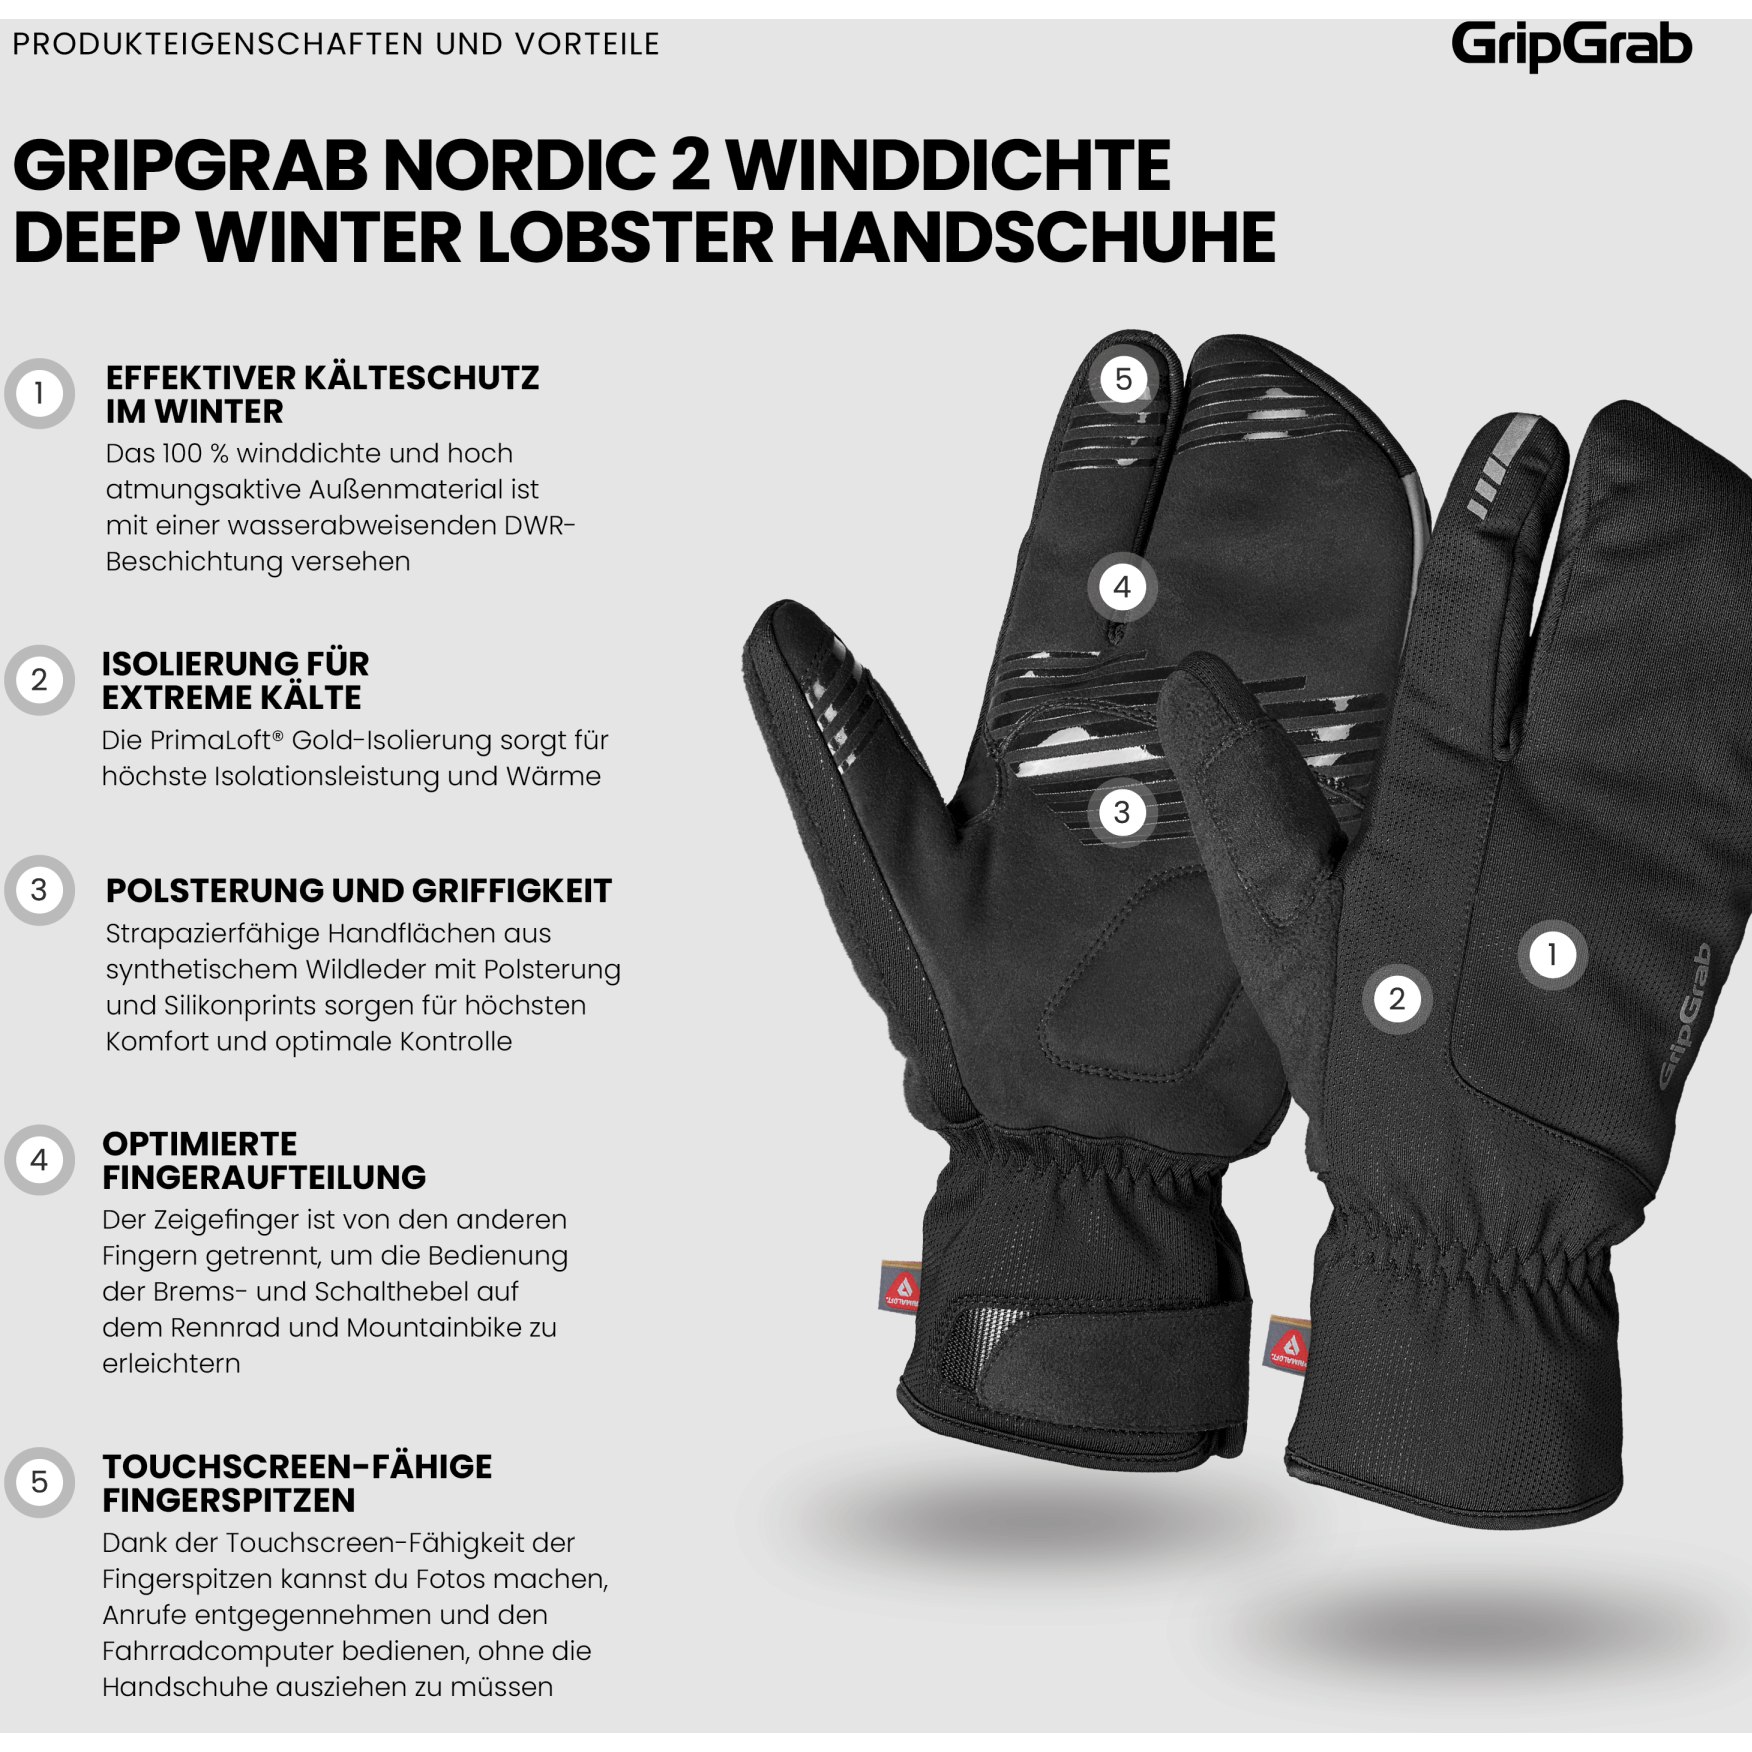 GripGrab Nordic 2 Windproof Deep Winter Lobster Gloves - black